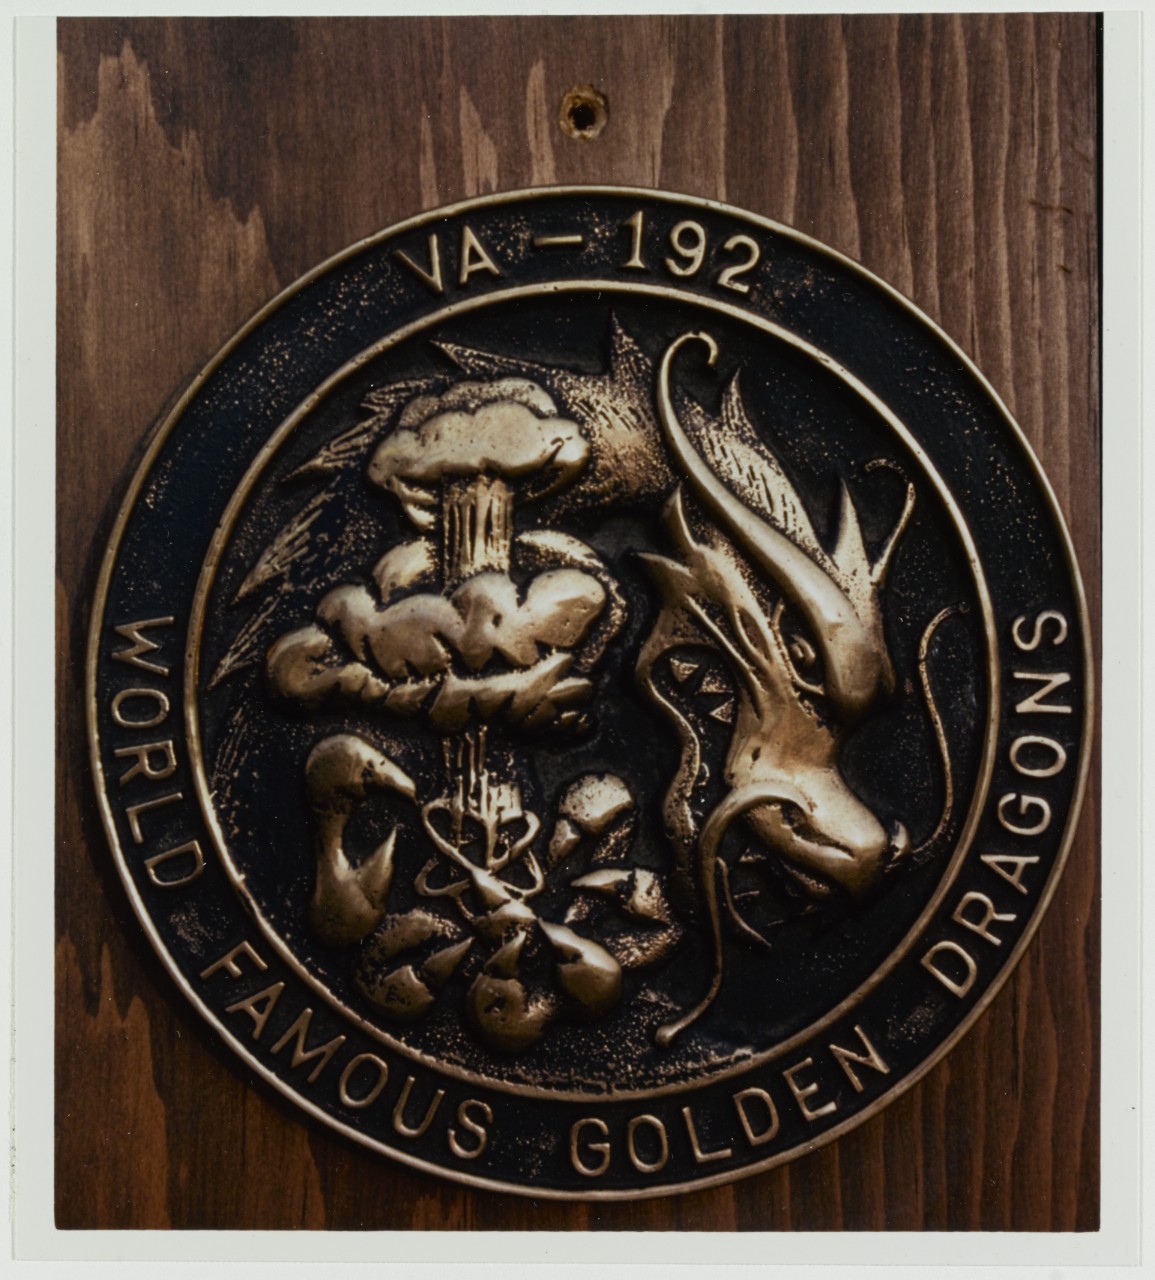 Insignia: Attack Squadron 192 (VA-192) World Famous Golden Dragons